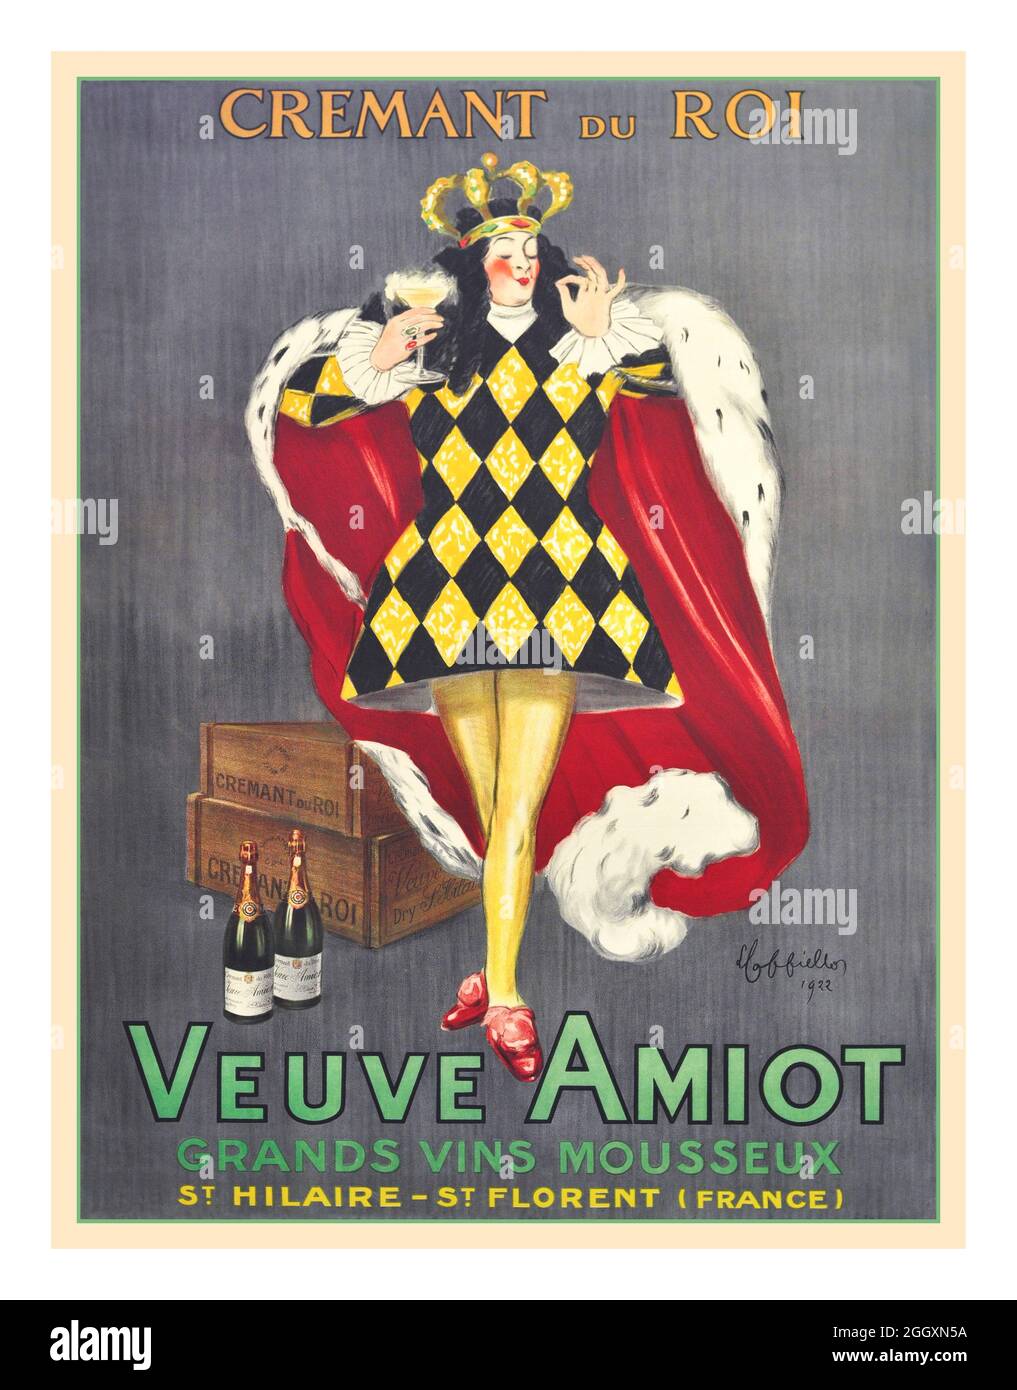 VEUVE AMIOT Vintage 1922 French Cremant du Roi Veuve Amiot sparkling wine poster lithograph by Cappiello -1922 Stock Photo